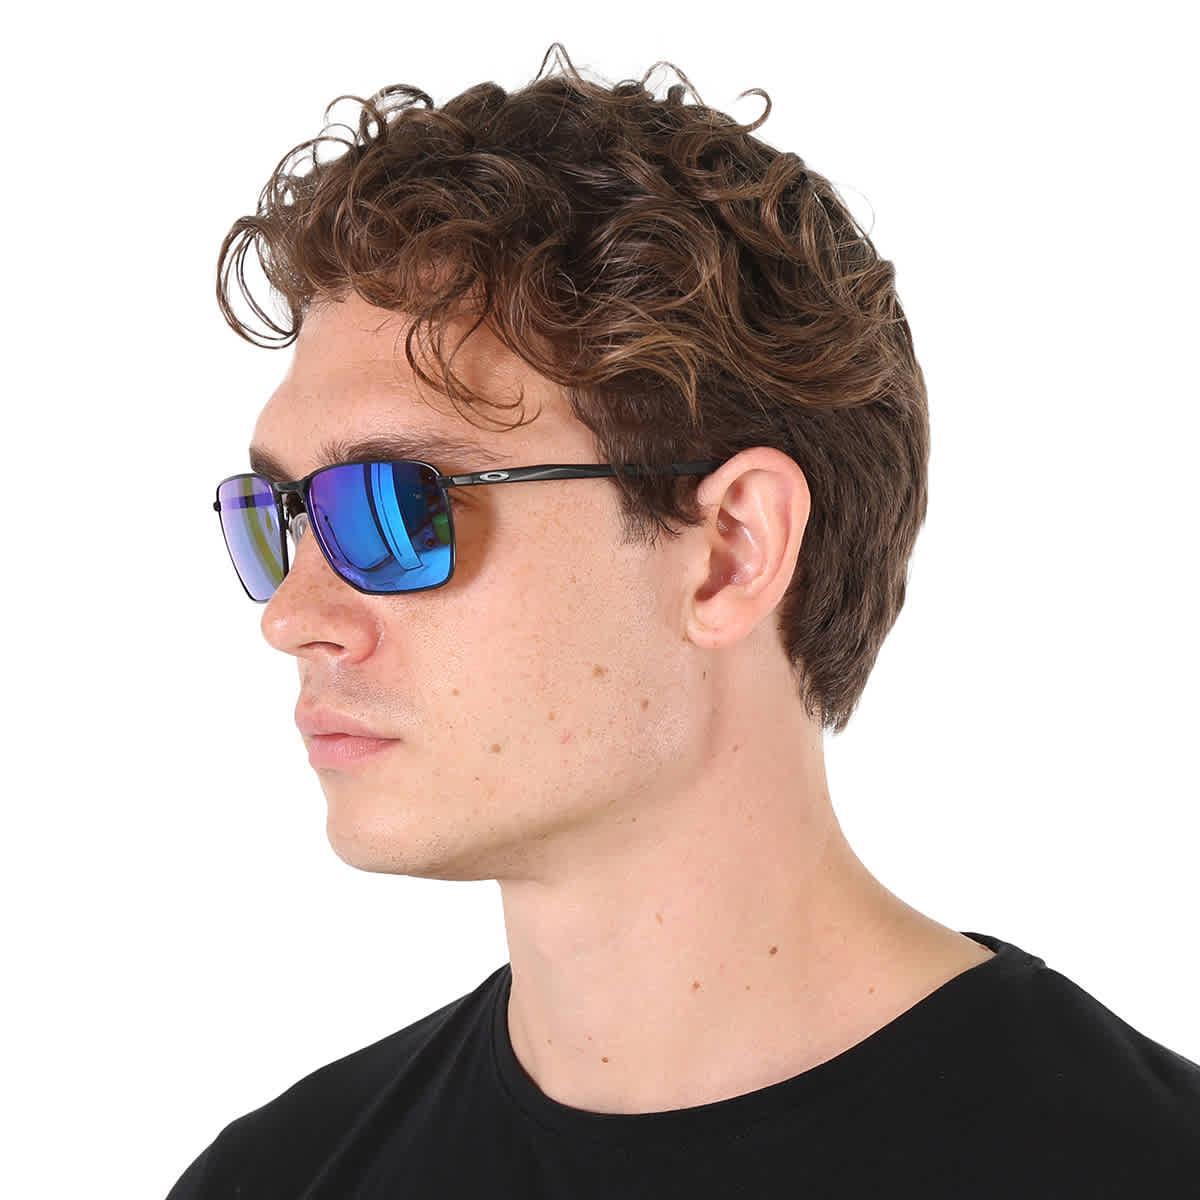 Oakley EJECTOR Polarized Sunglasses 0OO4142, Dark Grey Product Image